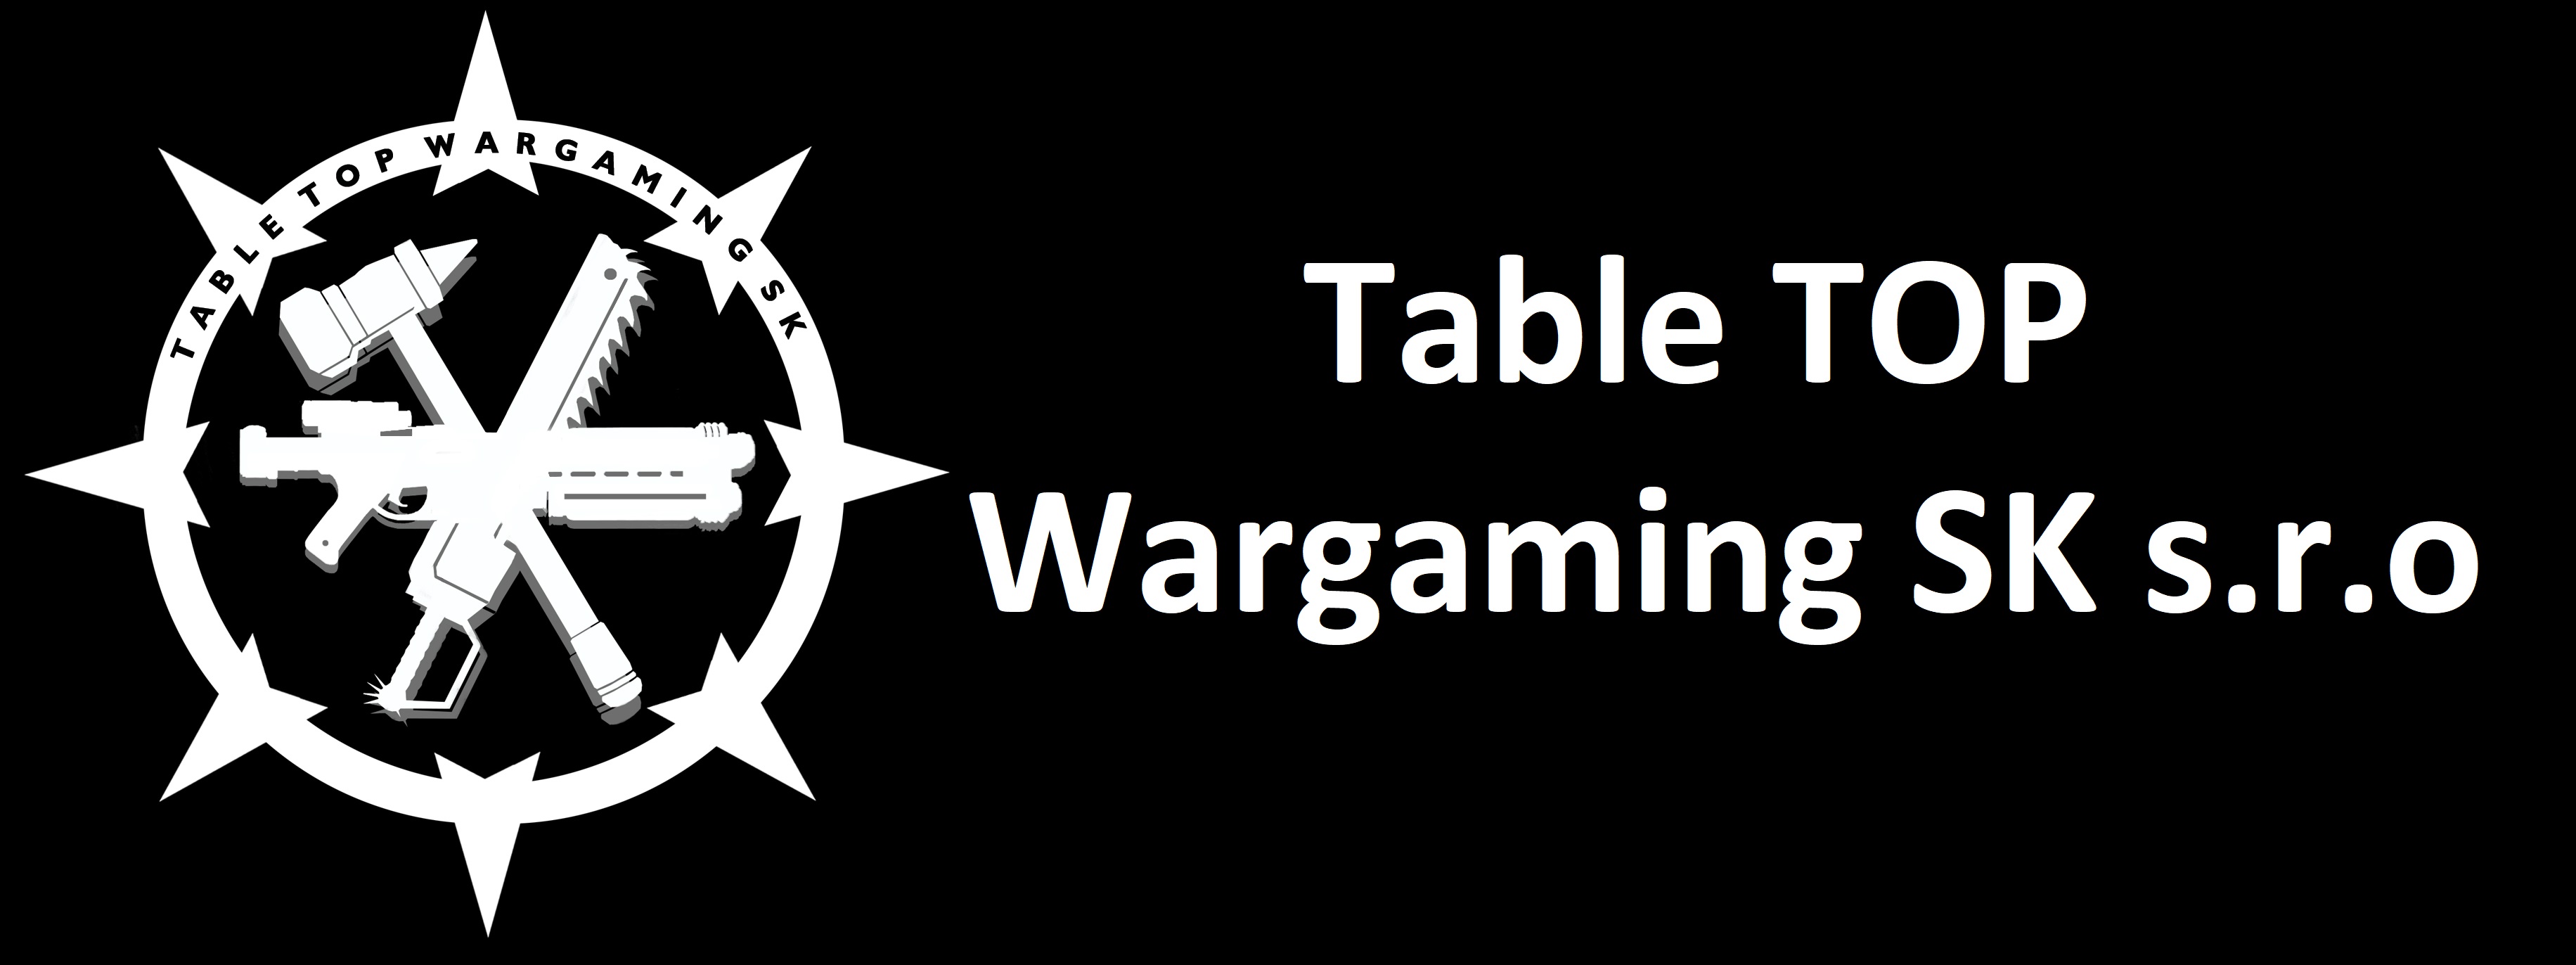 tabletopwargaming.sk